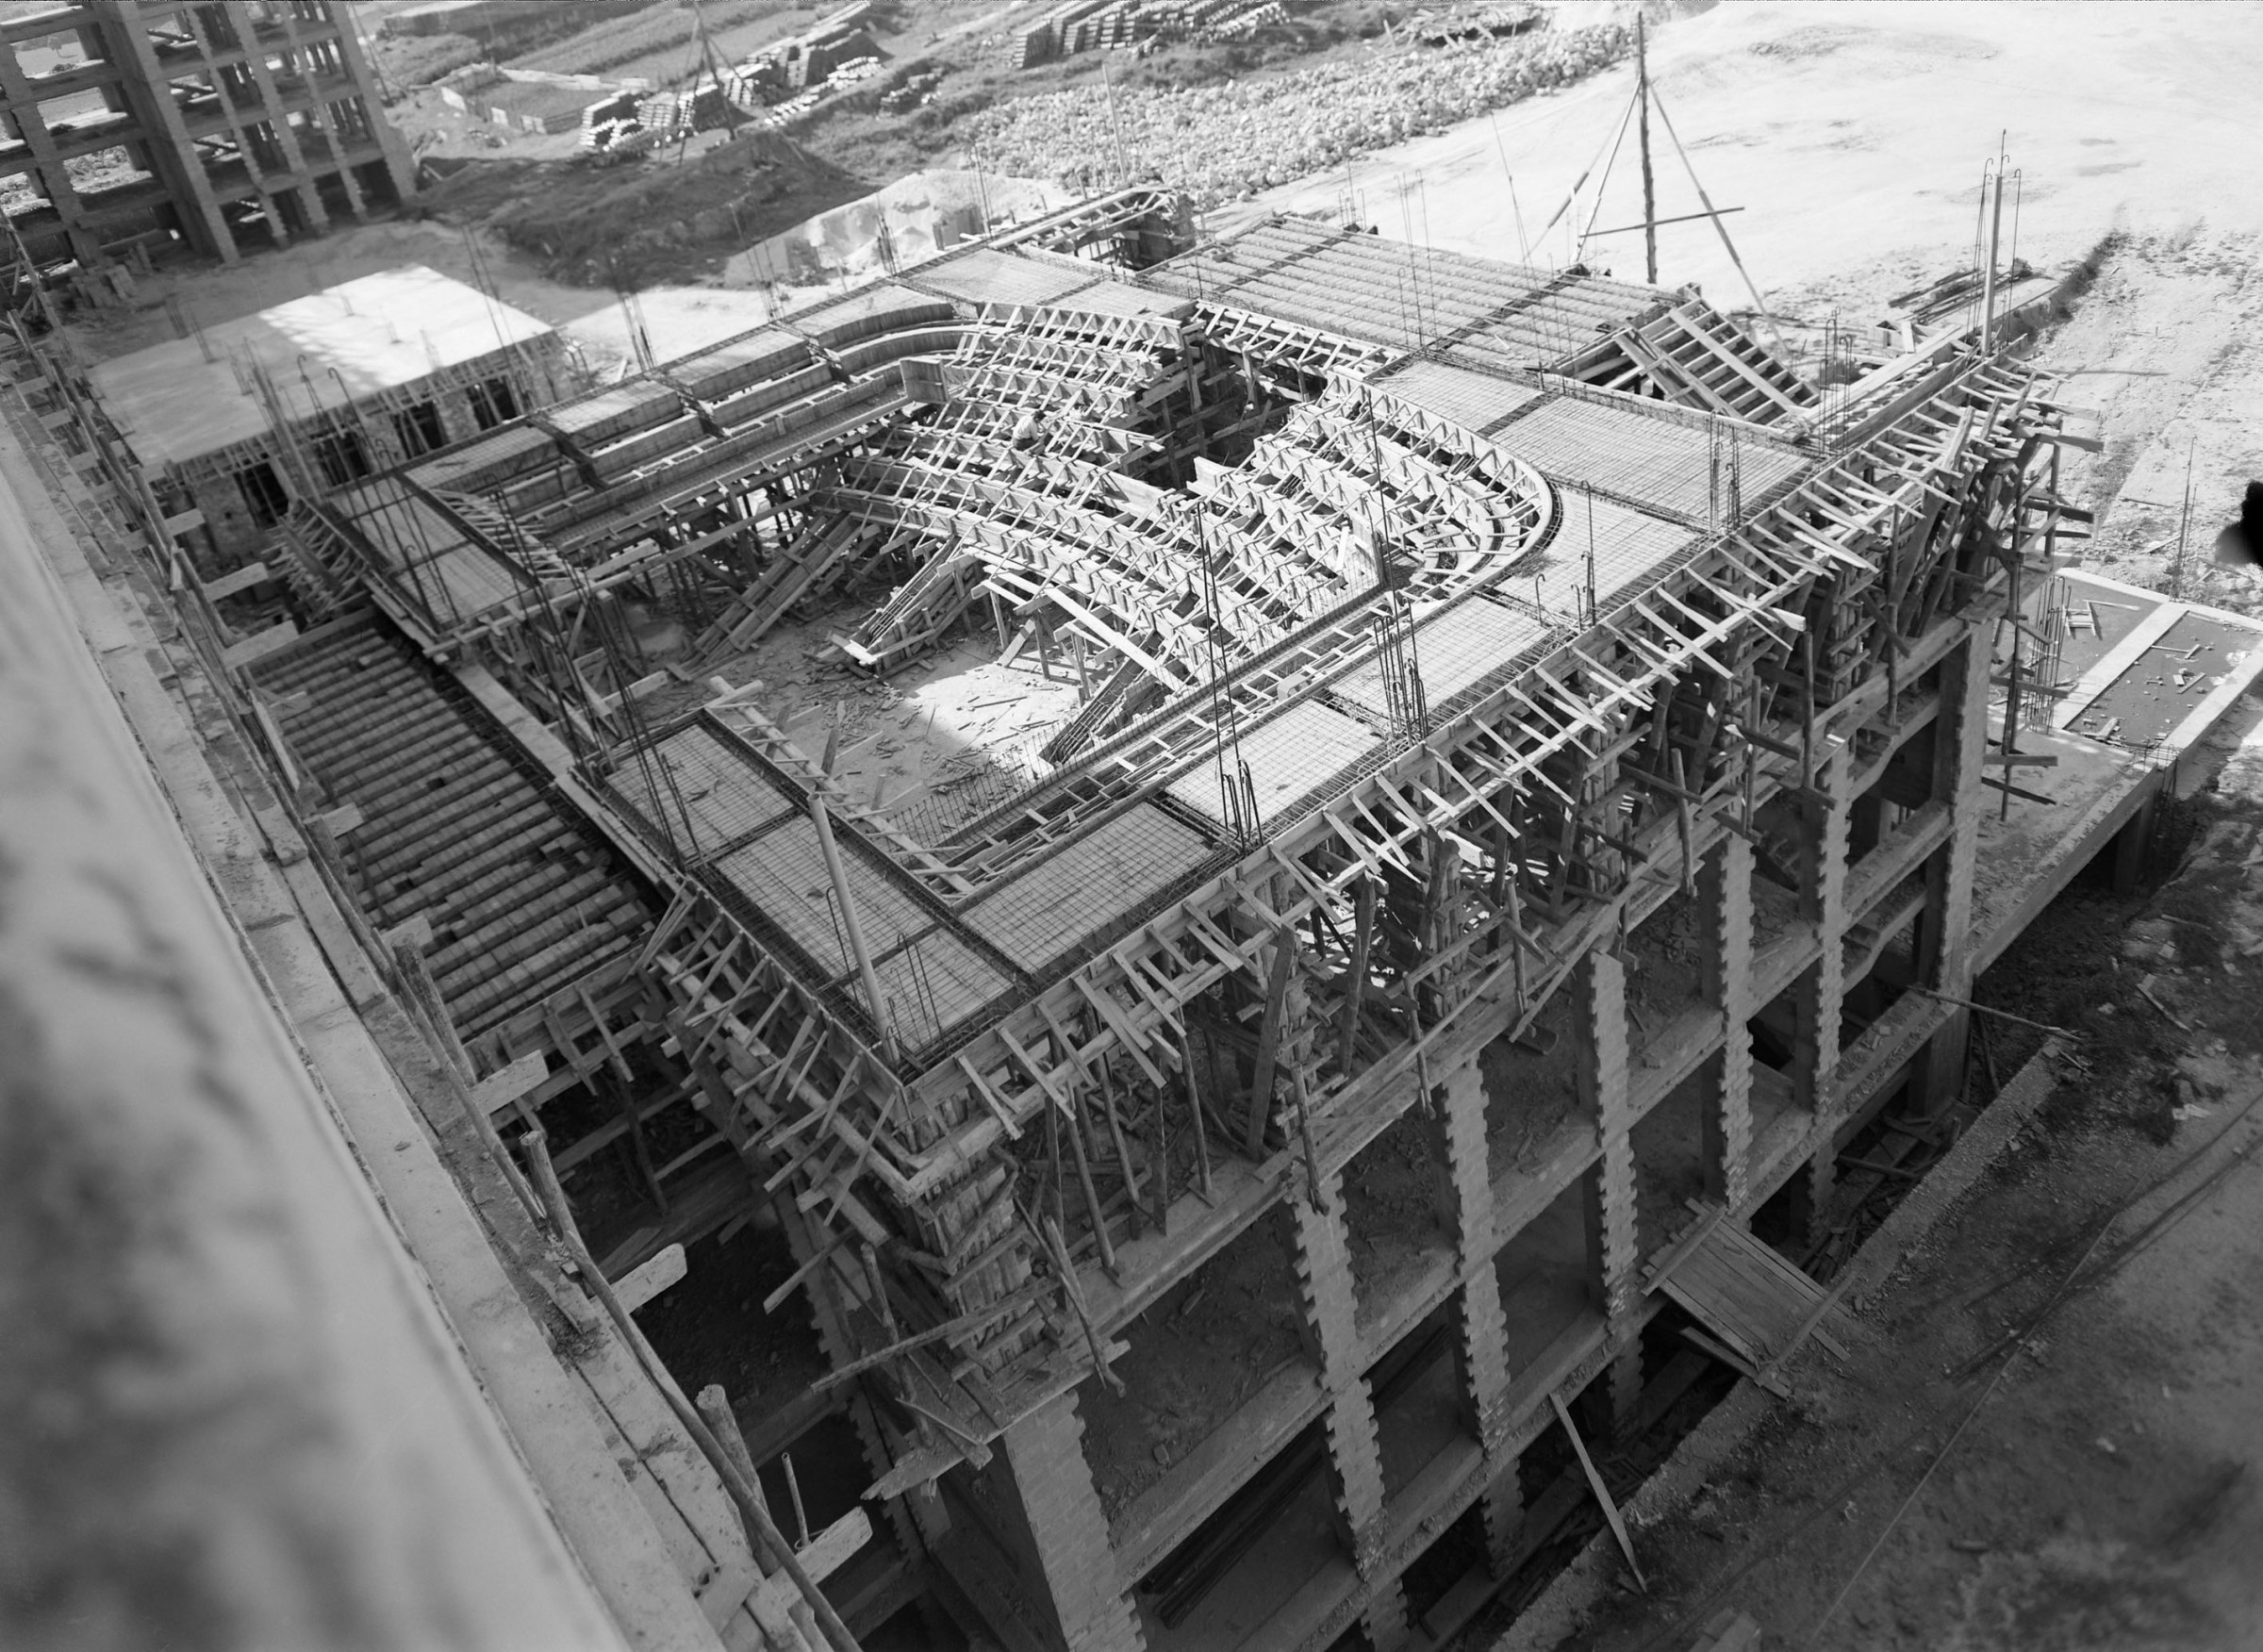 04-construc3a7c3a3o-hsm-aula-magna-1950.jpg